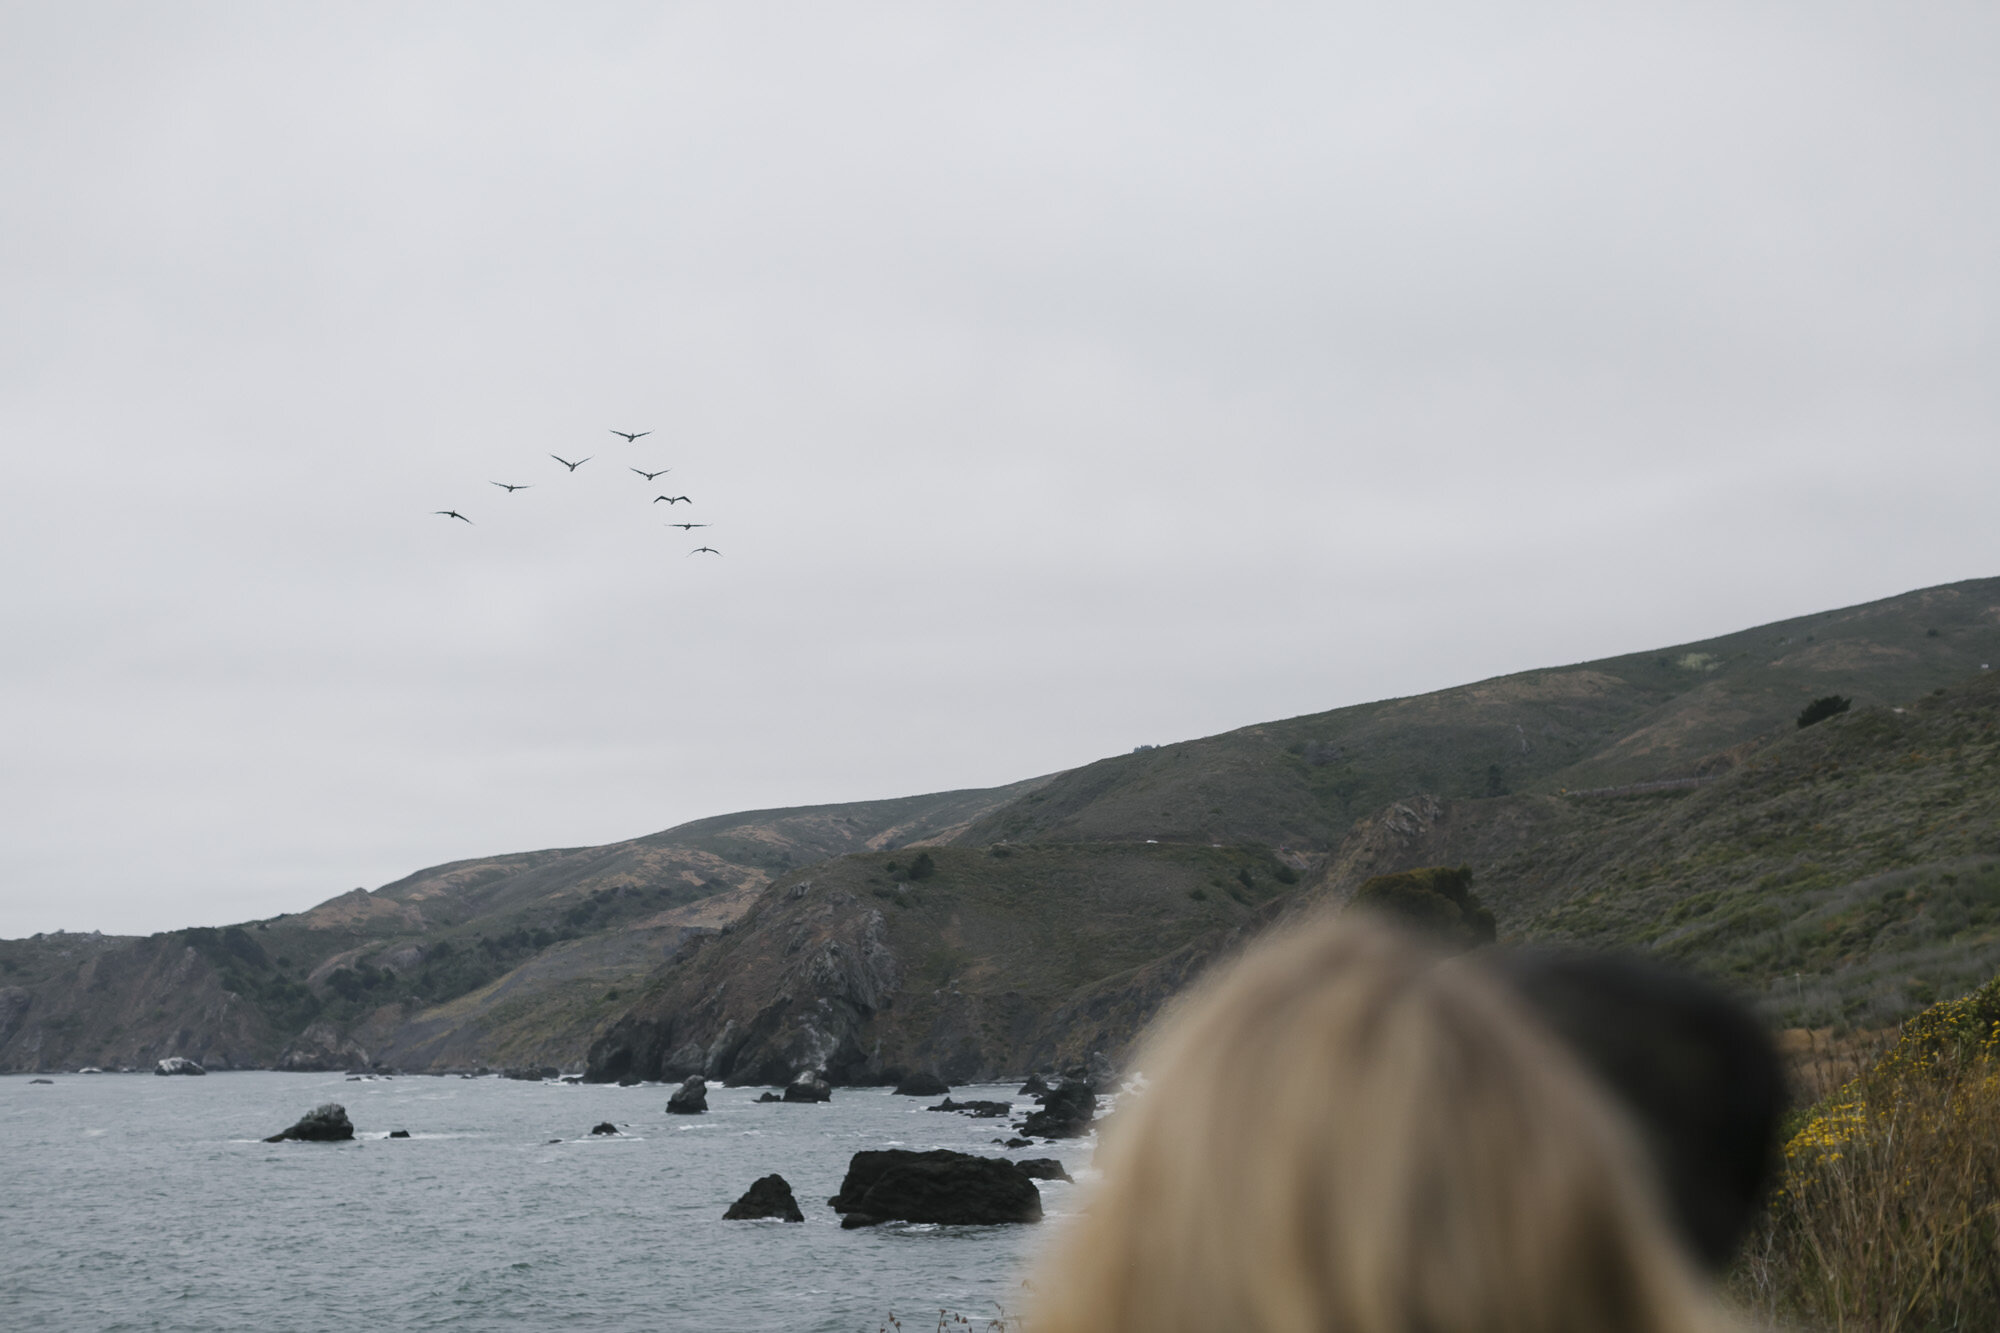 Pelicans flying in a v shape soar overhead on the California coast